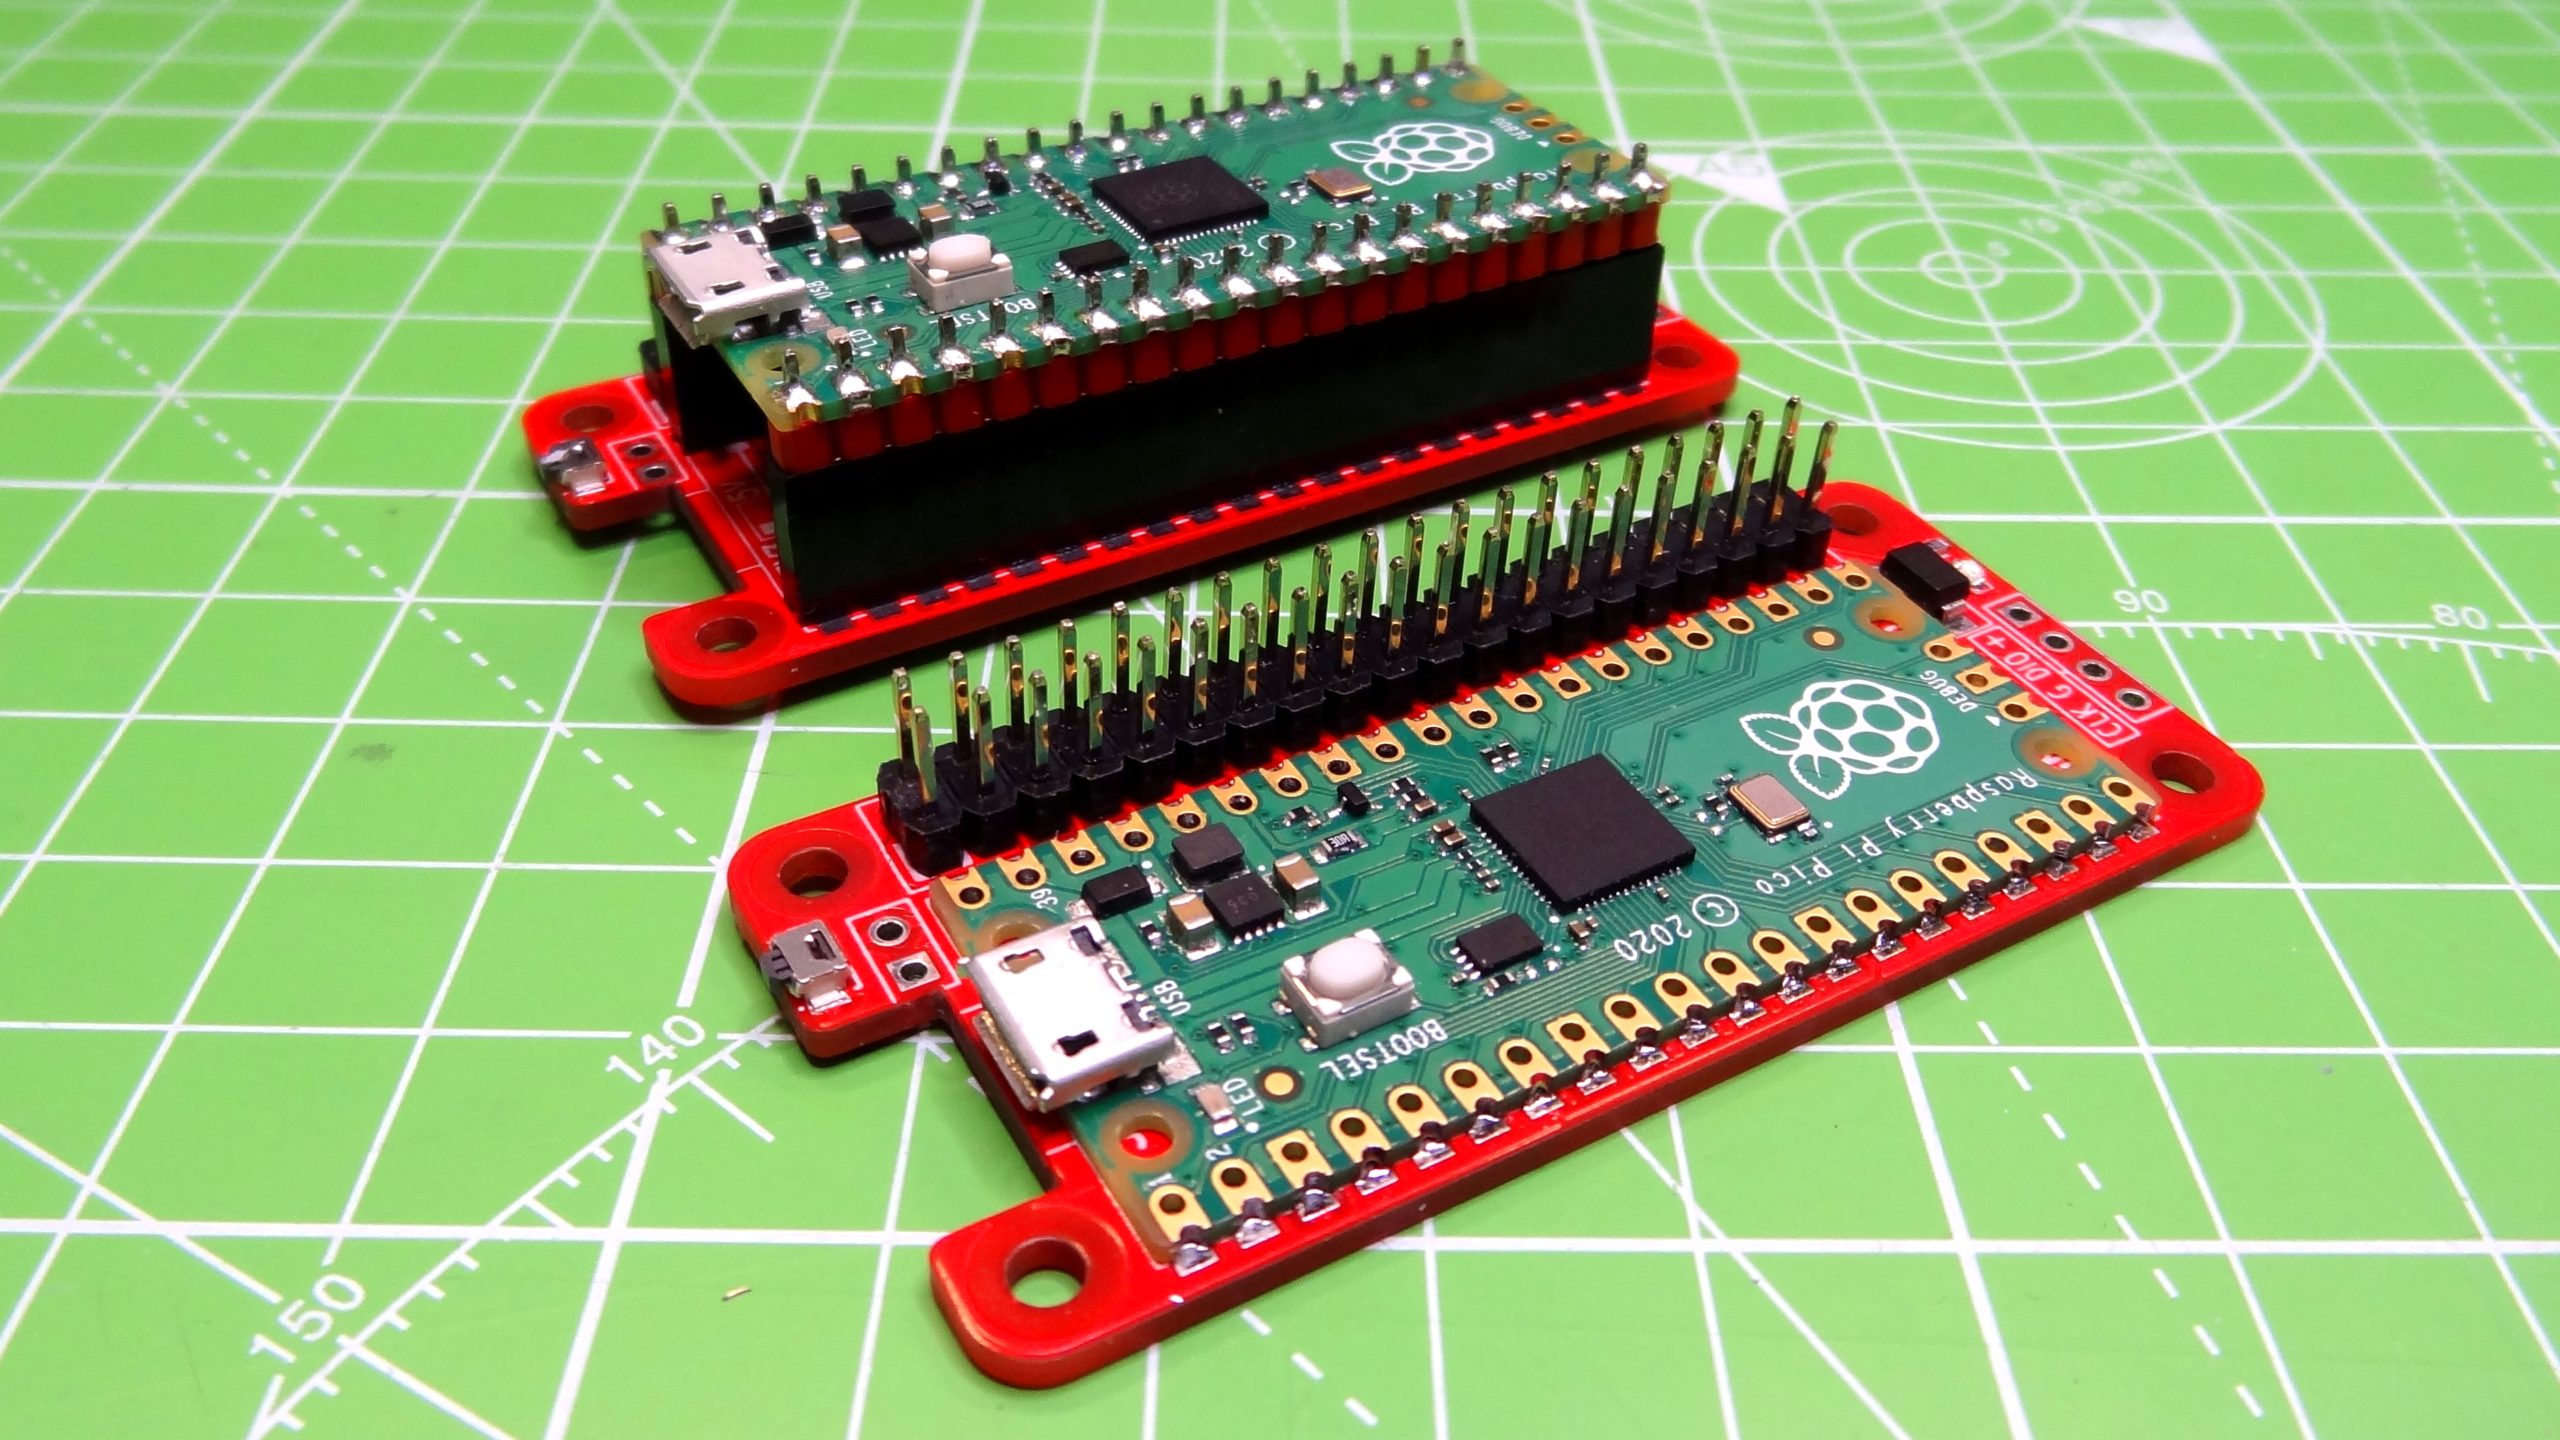 red-robotics-pico-2-pi-review:-use-hats-with-raspberry-pi-pico